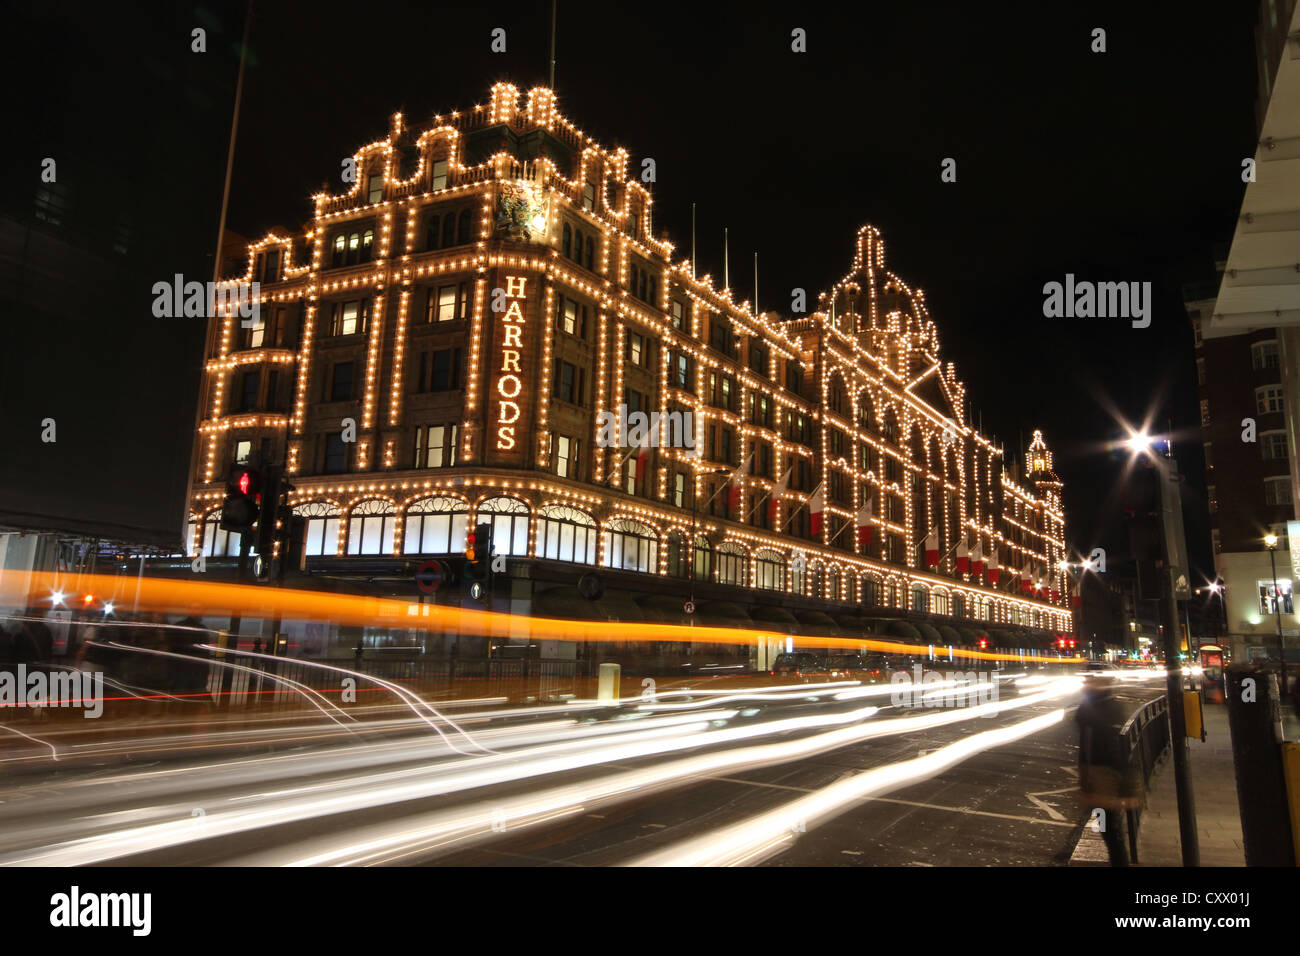 London, Londra, city, europe, a beautiful picture of Nightsbridge Harrods by night Stock Photo